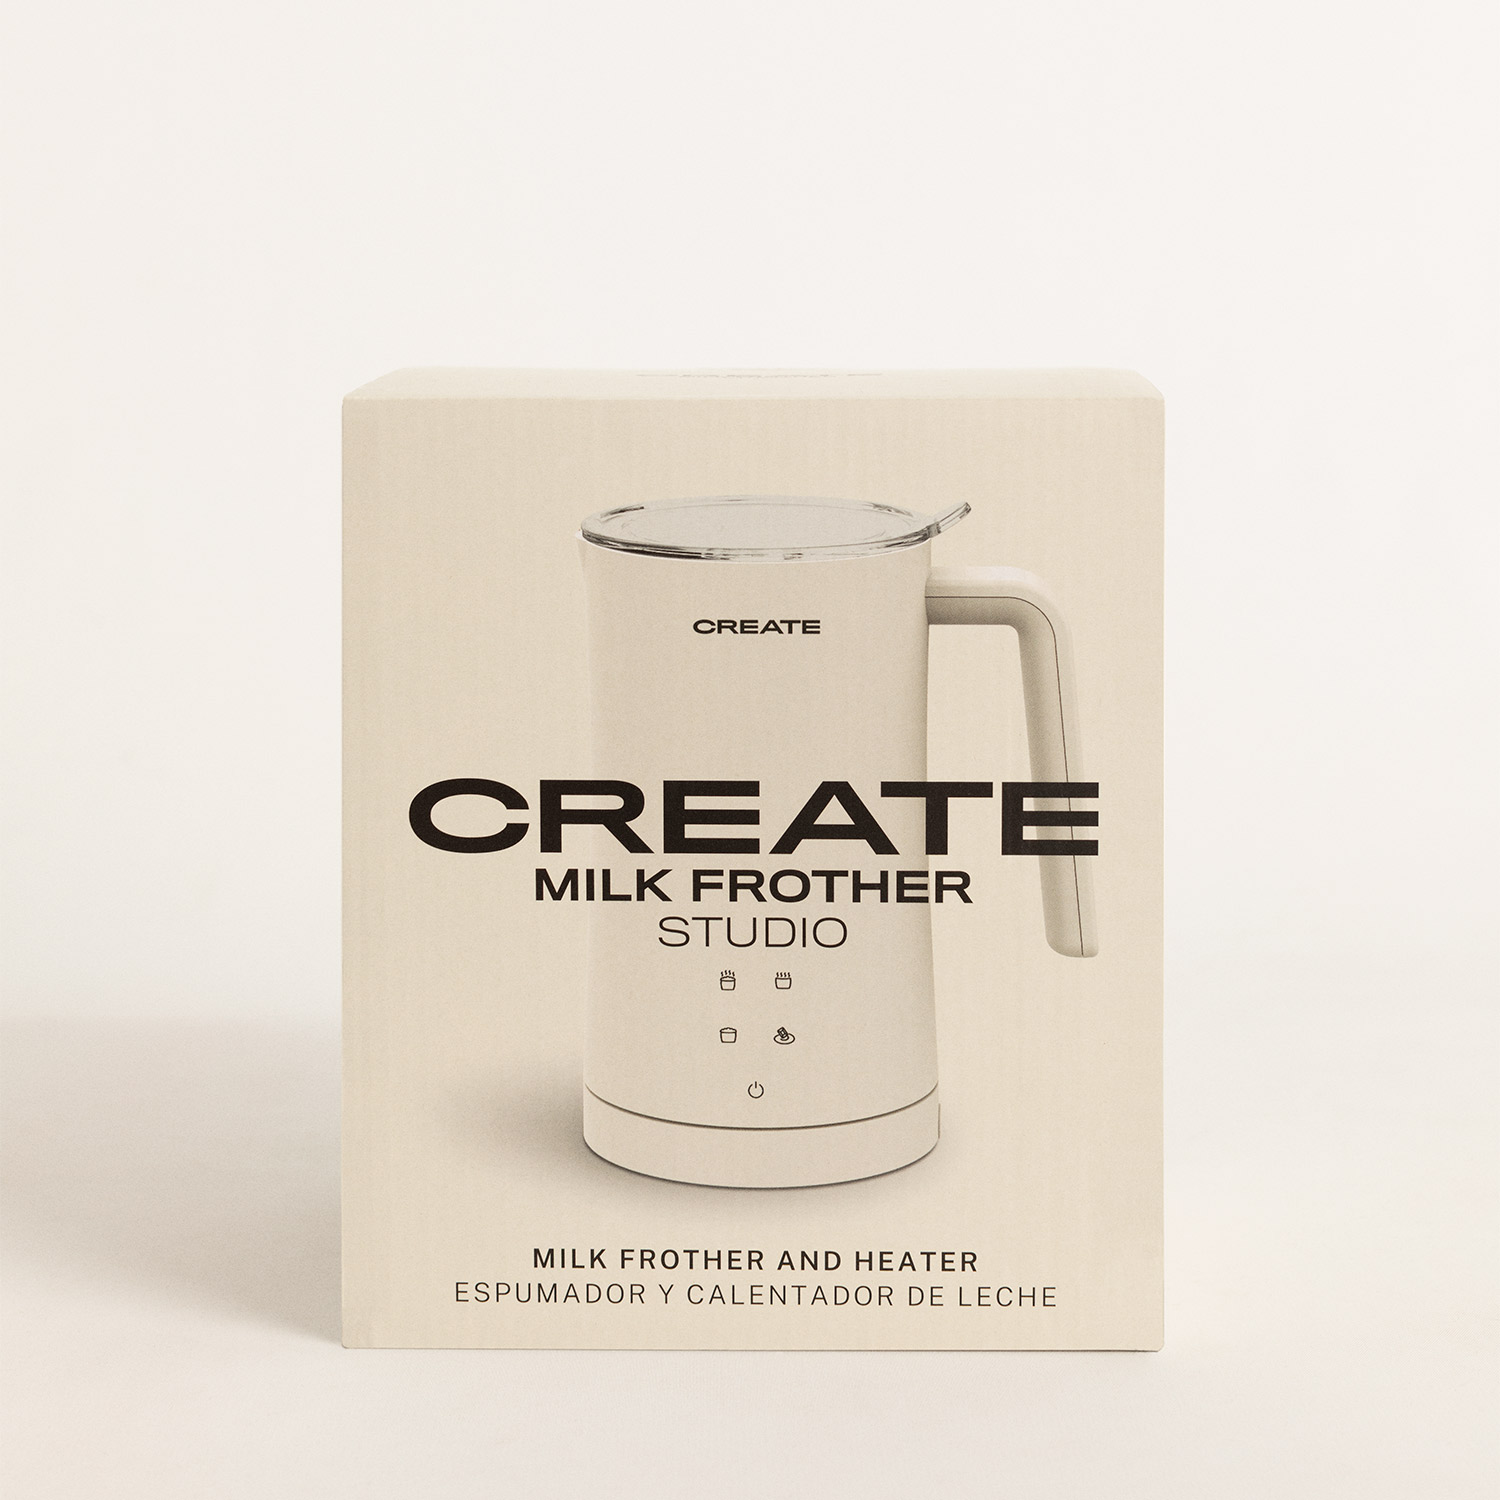 Espumador De Leche Milkfrother Pro Create Ikohs - Mi Casa PRO